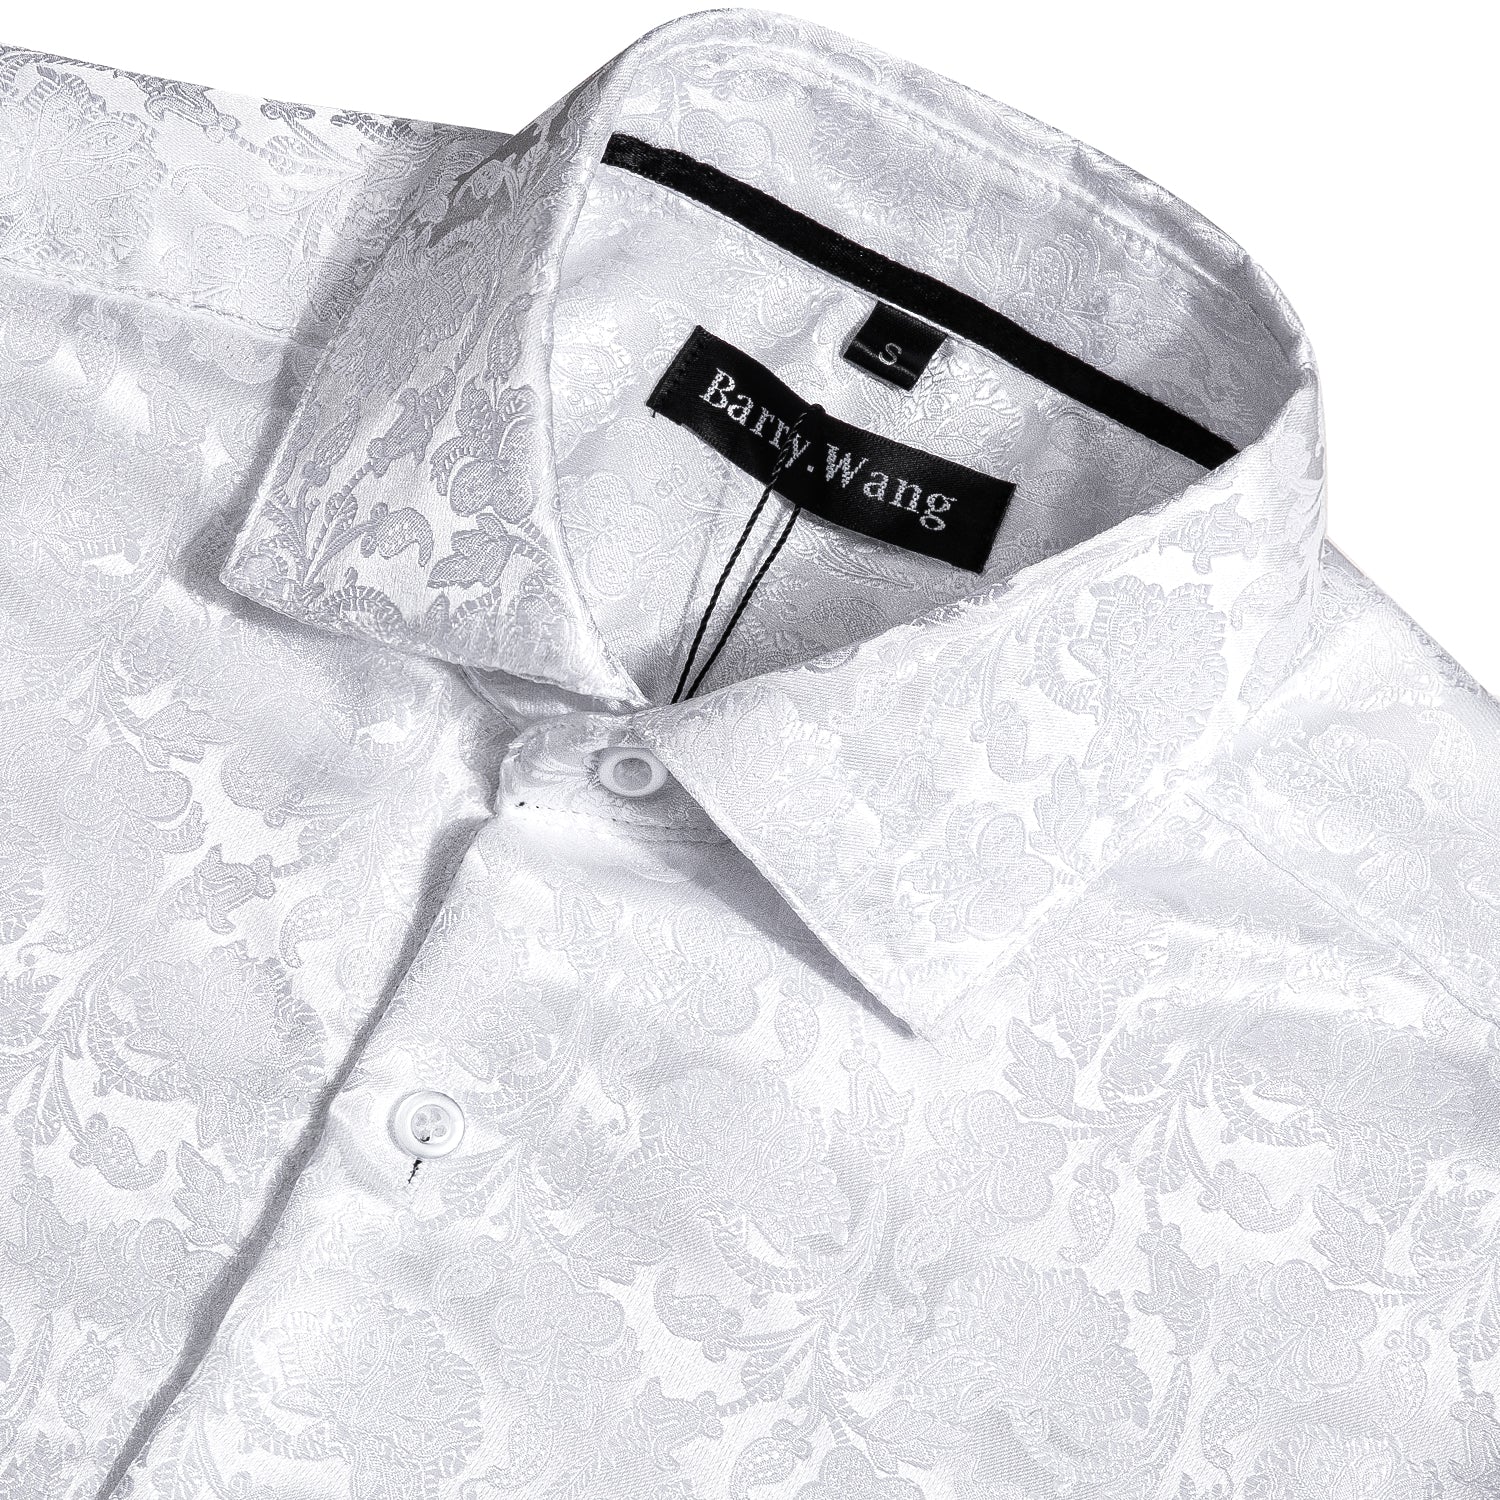 Barry.wang Button Down Shirt White Floral Silk Men's Shirt Hot Selling